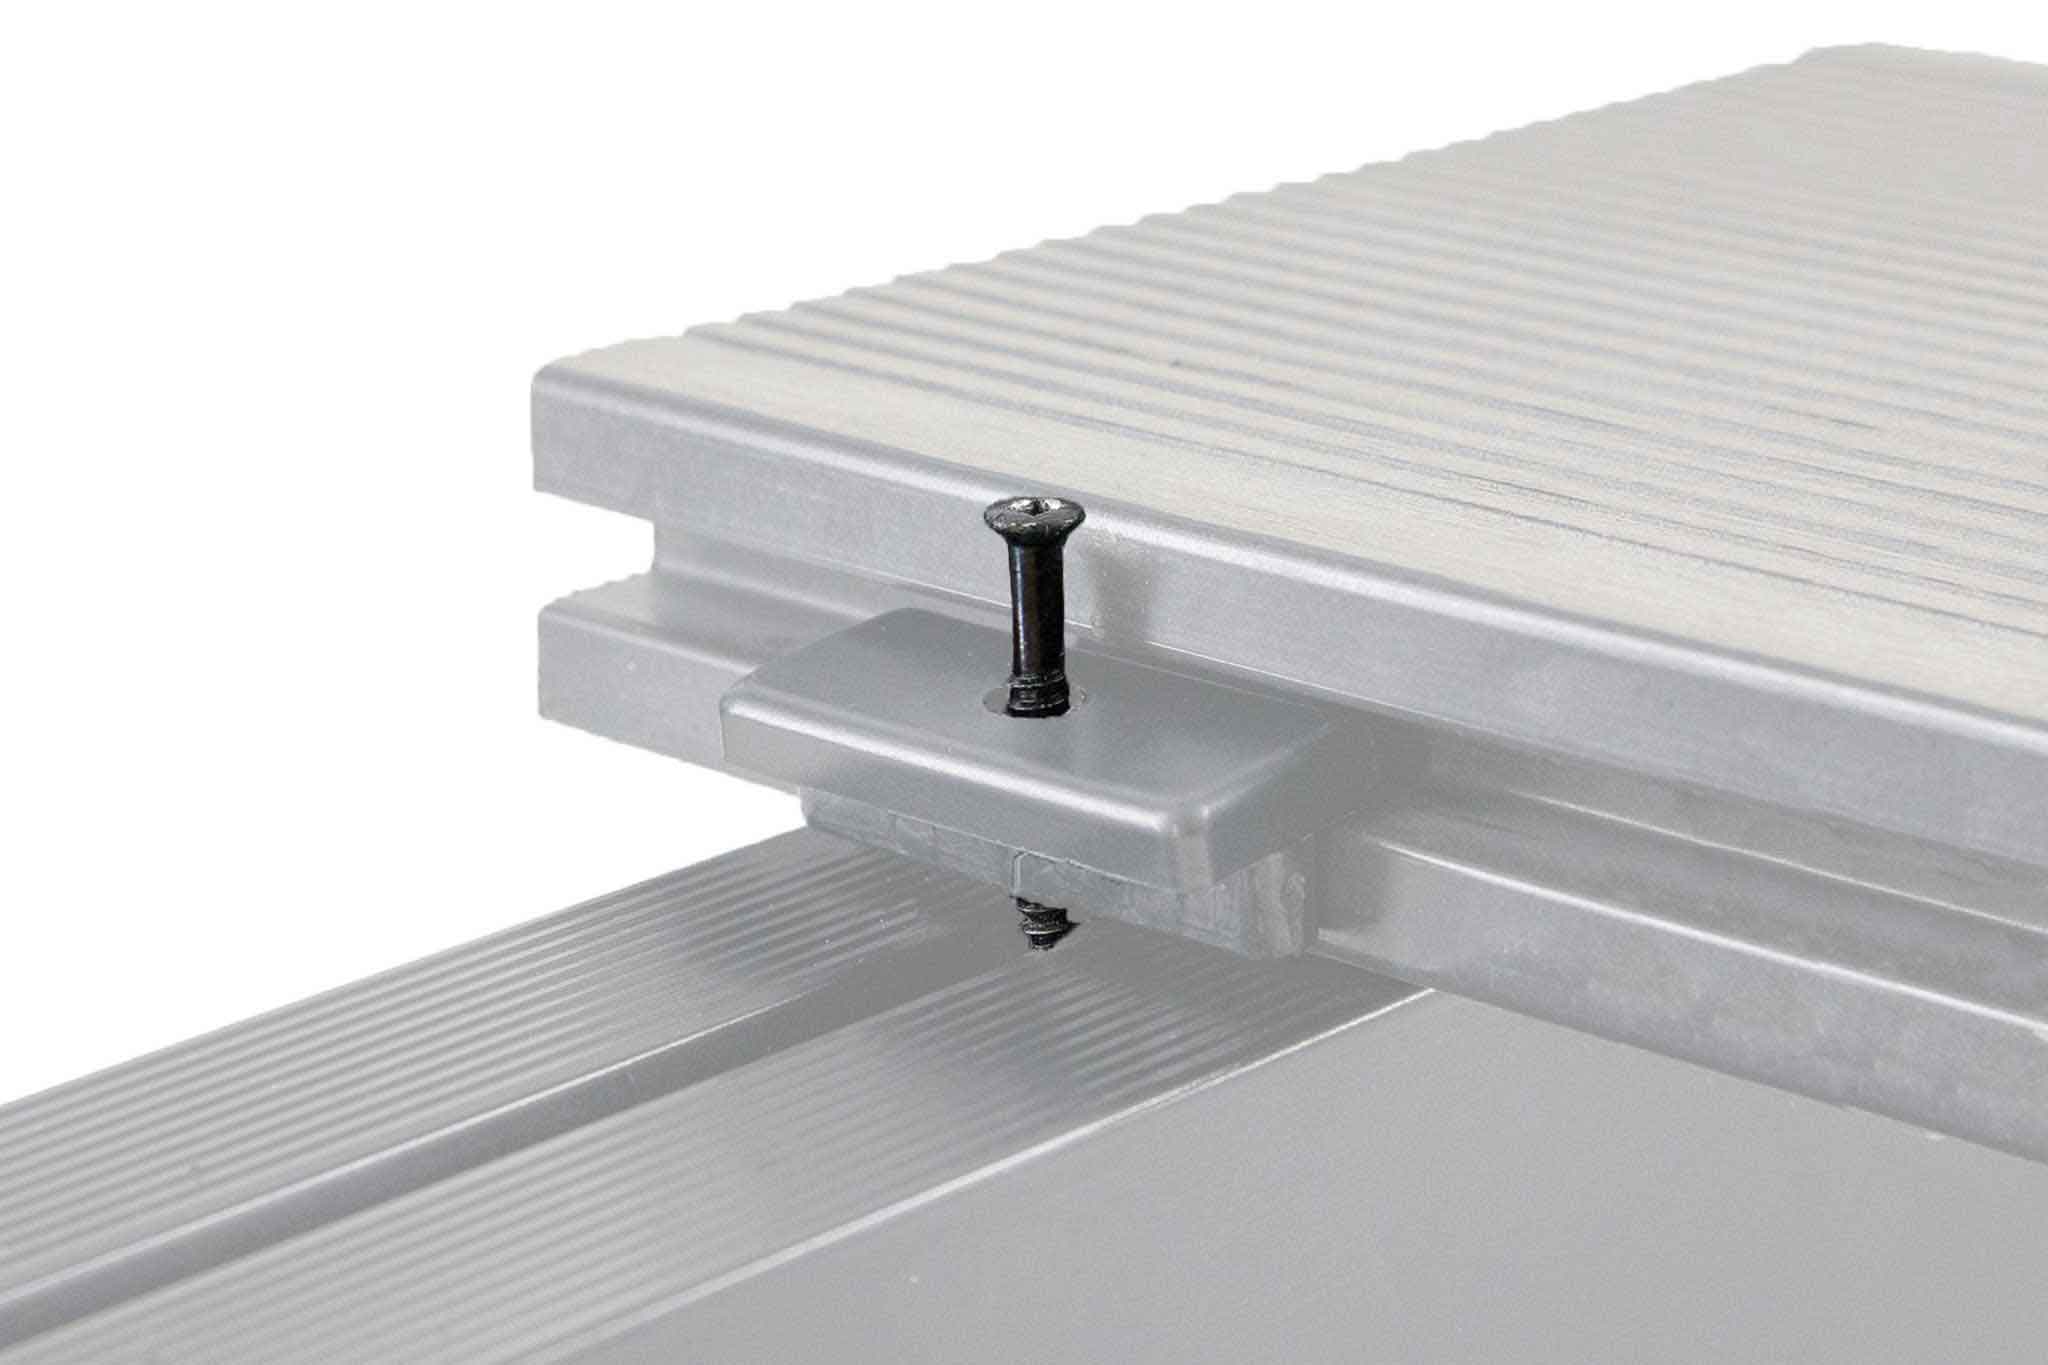 30mm Composite Decking Screws for aluminium joist (200/pack)